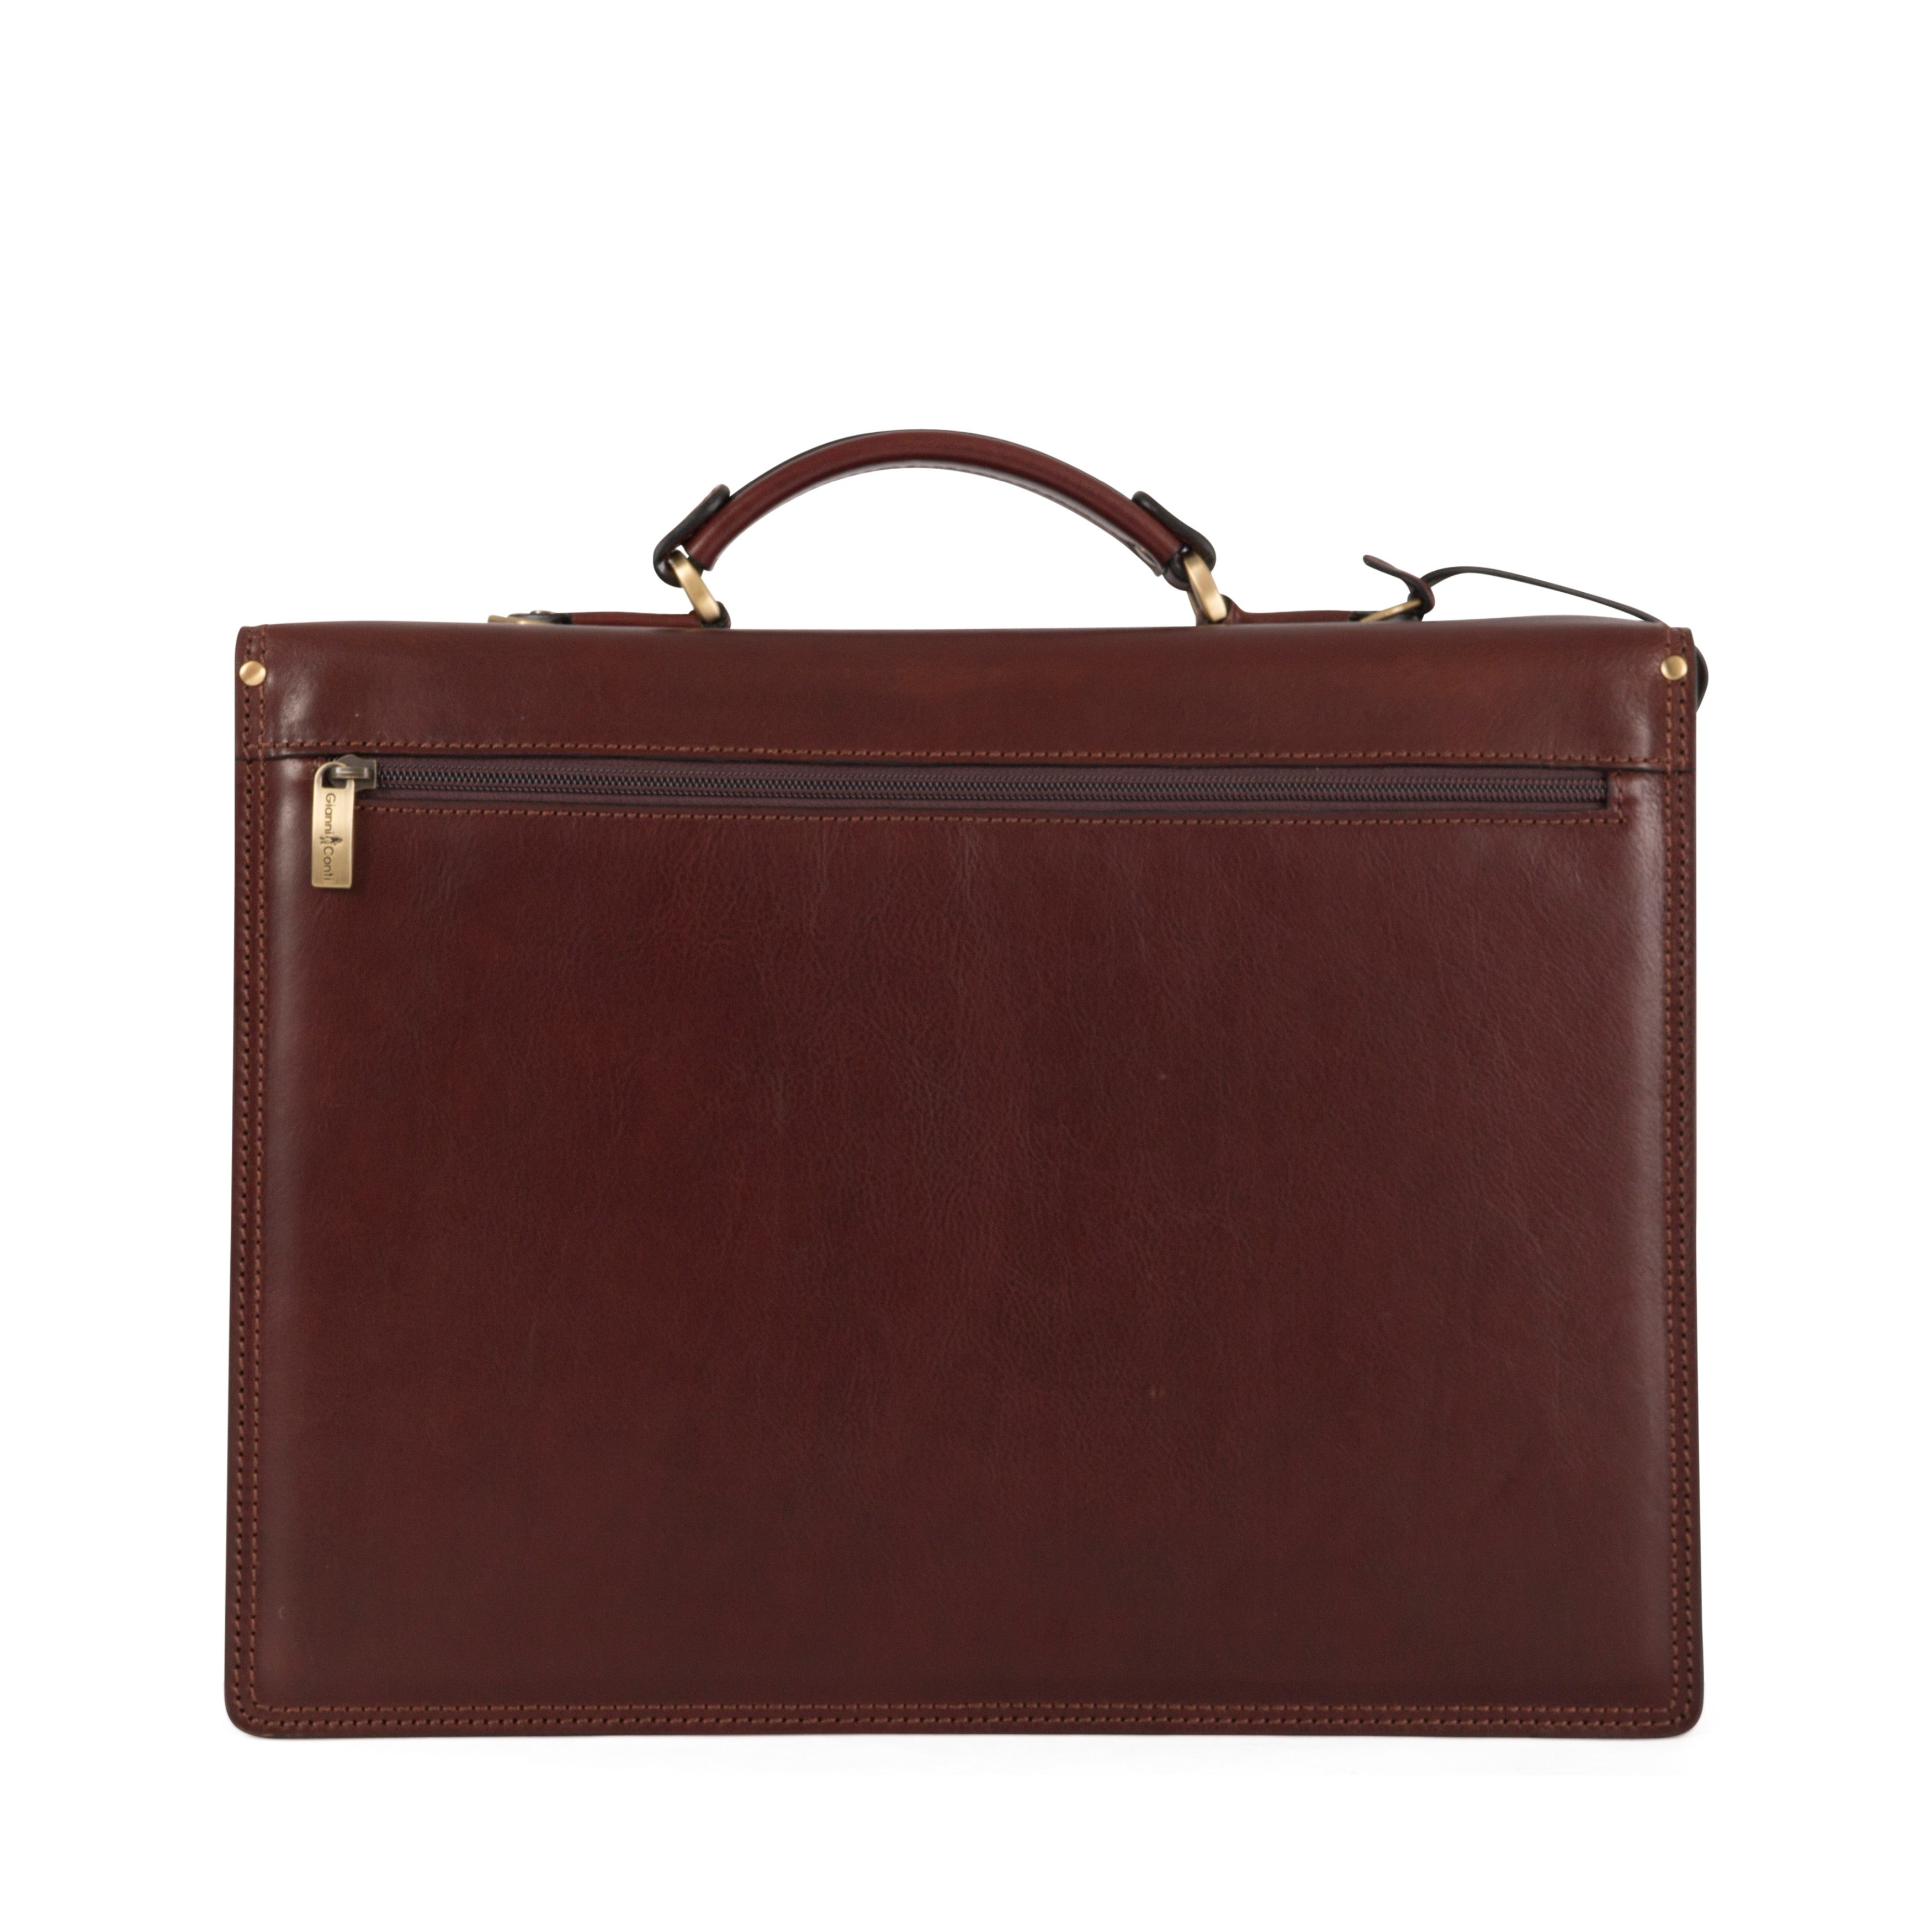 ALEXIS Gianni Conti Italian Leather Briefcase